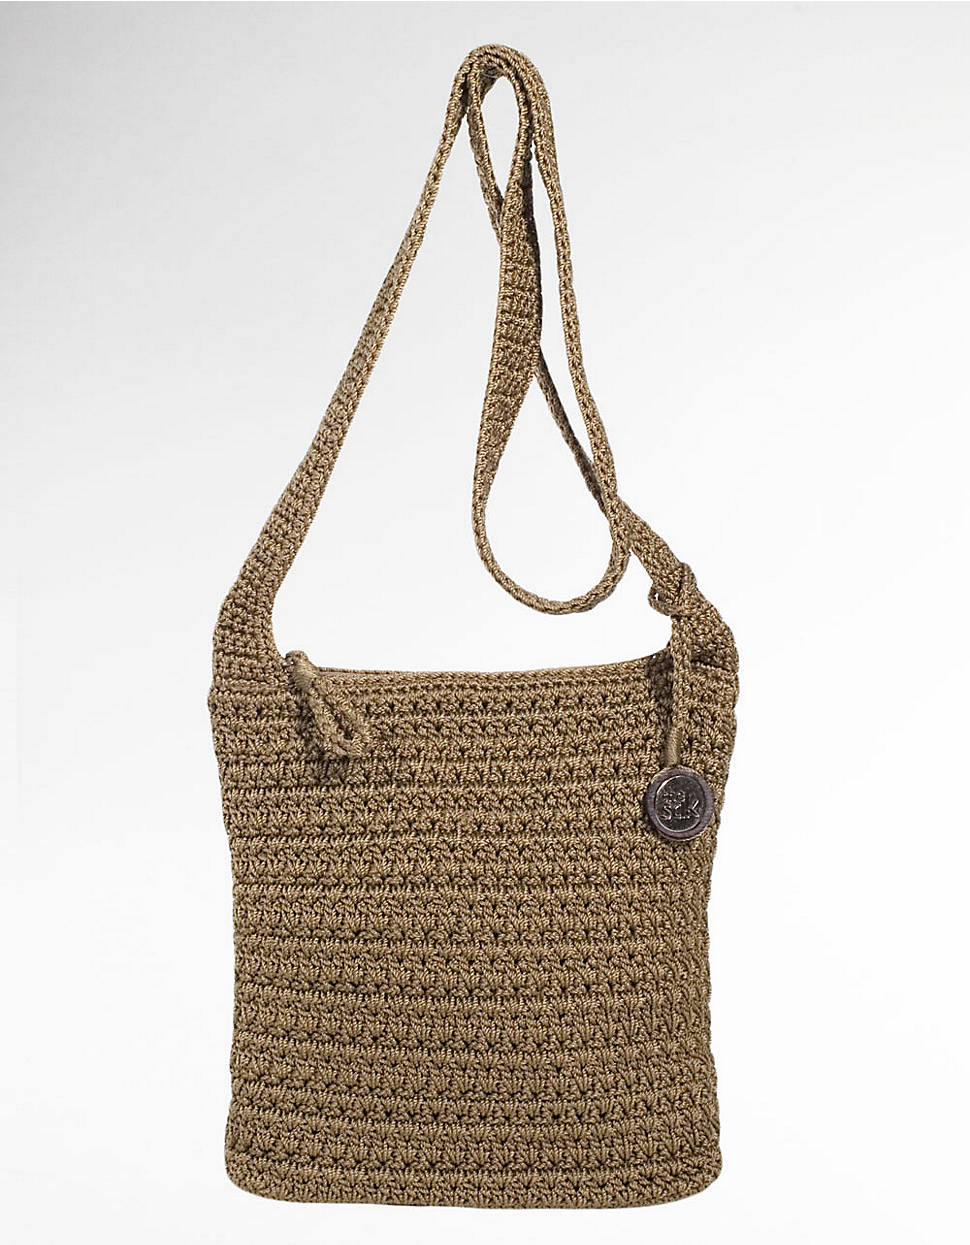 Lyst - The Sak Casual Classics Crochet Crossbody Bag in Brown